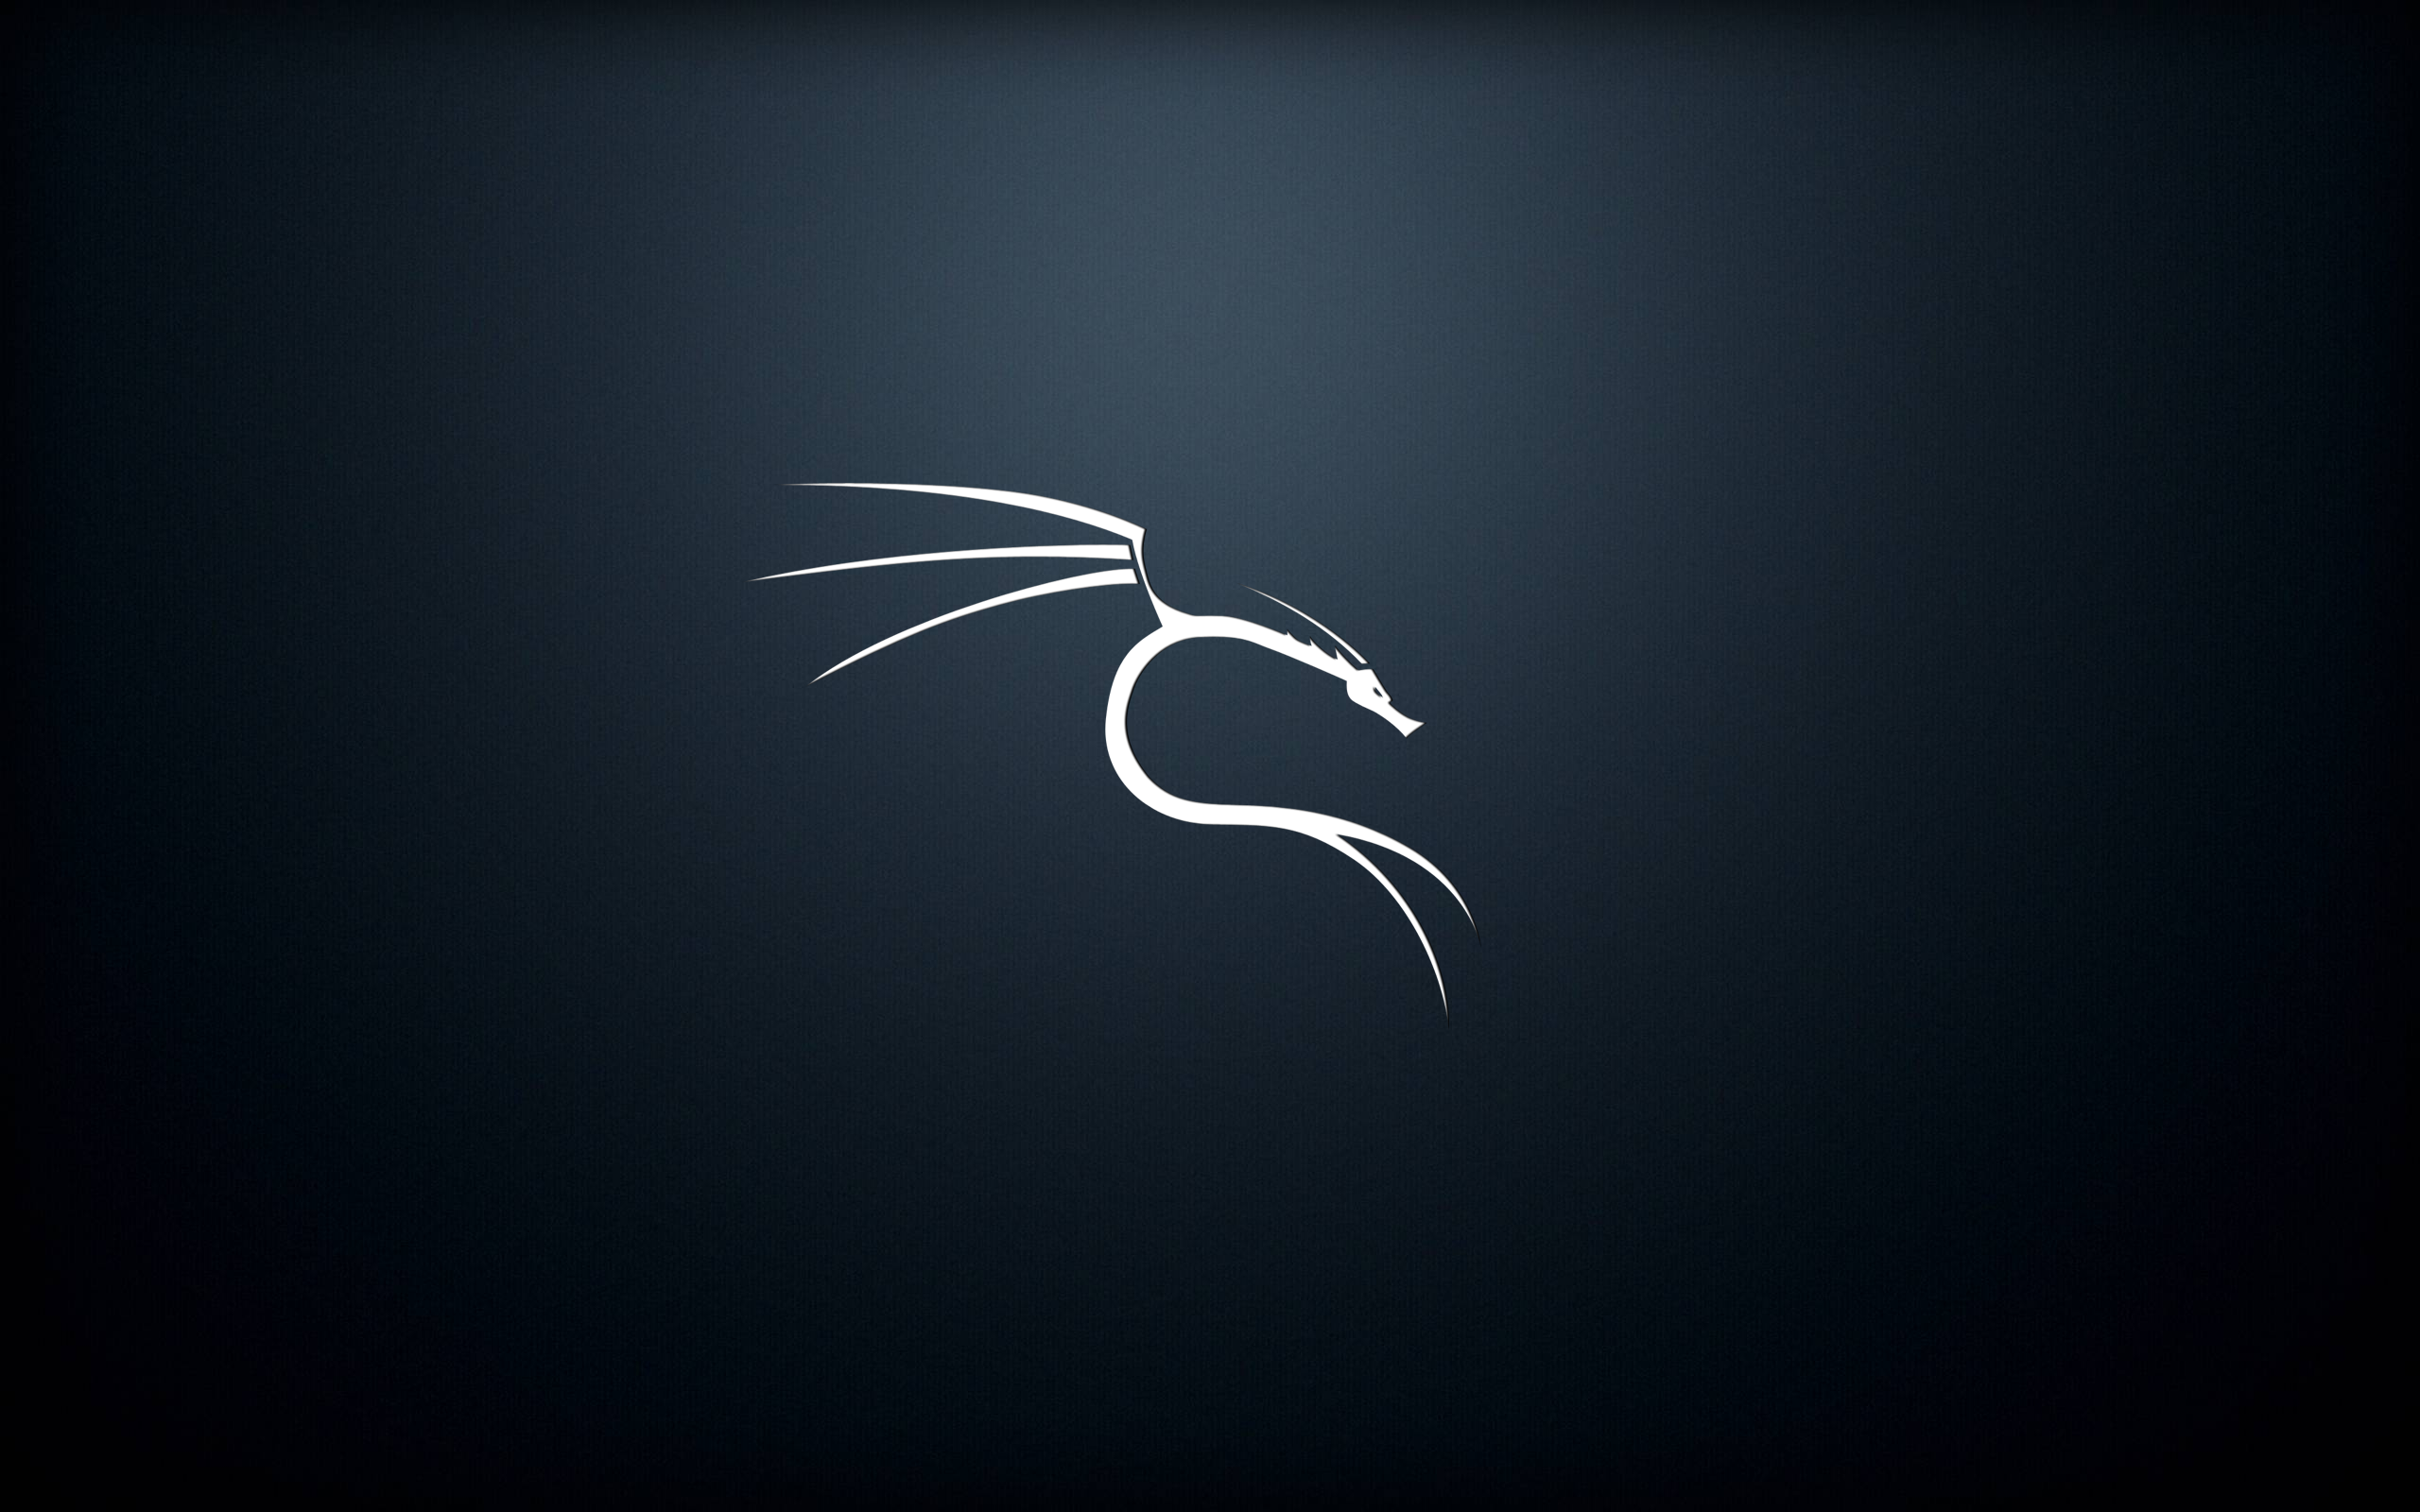 kali linux free download for windows 10